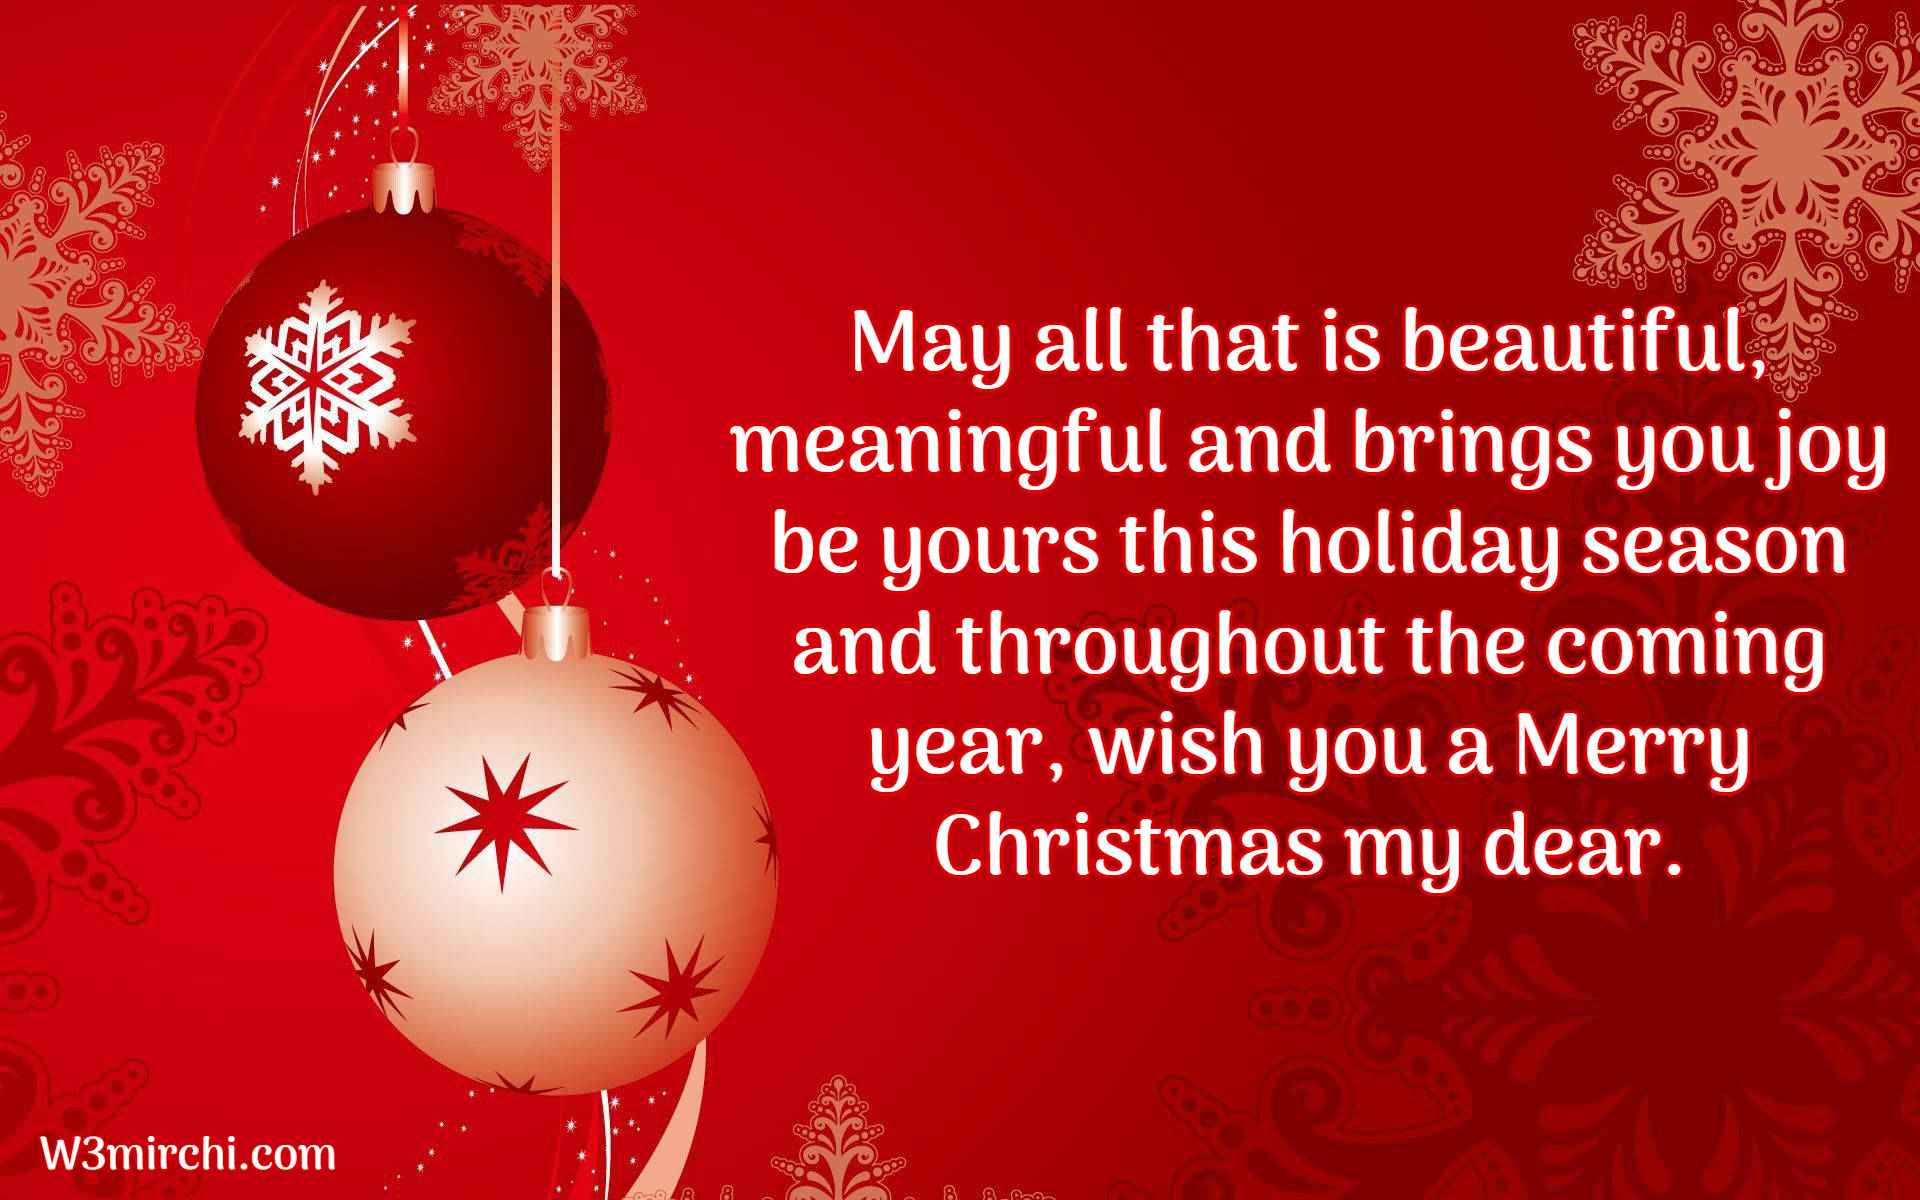 wish you a Merry Christmas my dear.